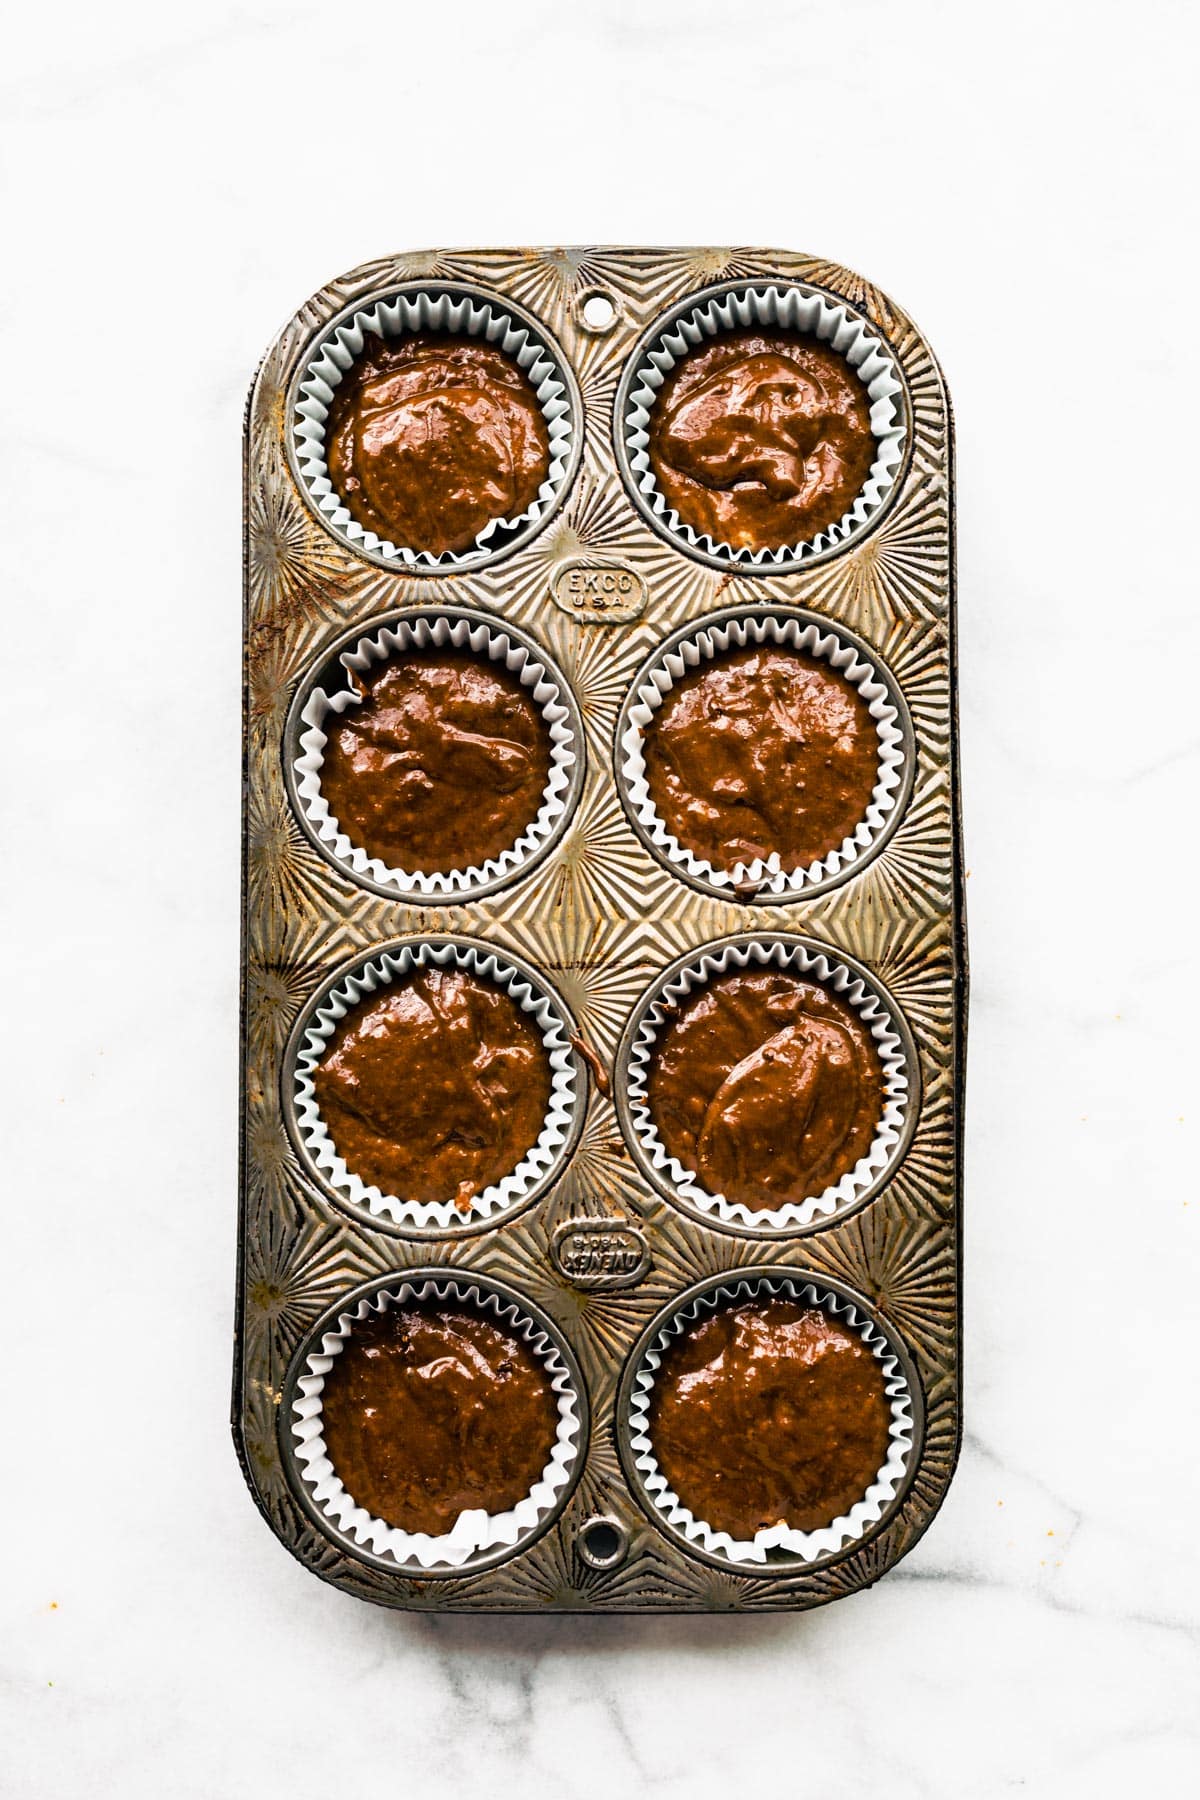 Gluten free chocolate banana muffins in an 8 count muffin tin.